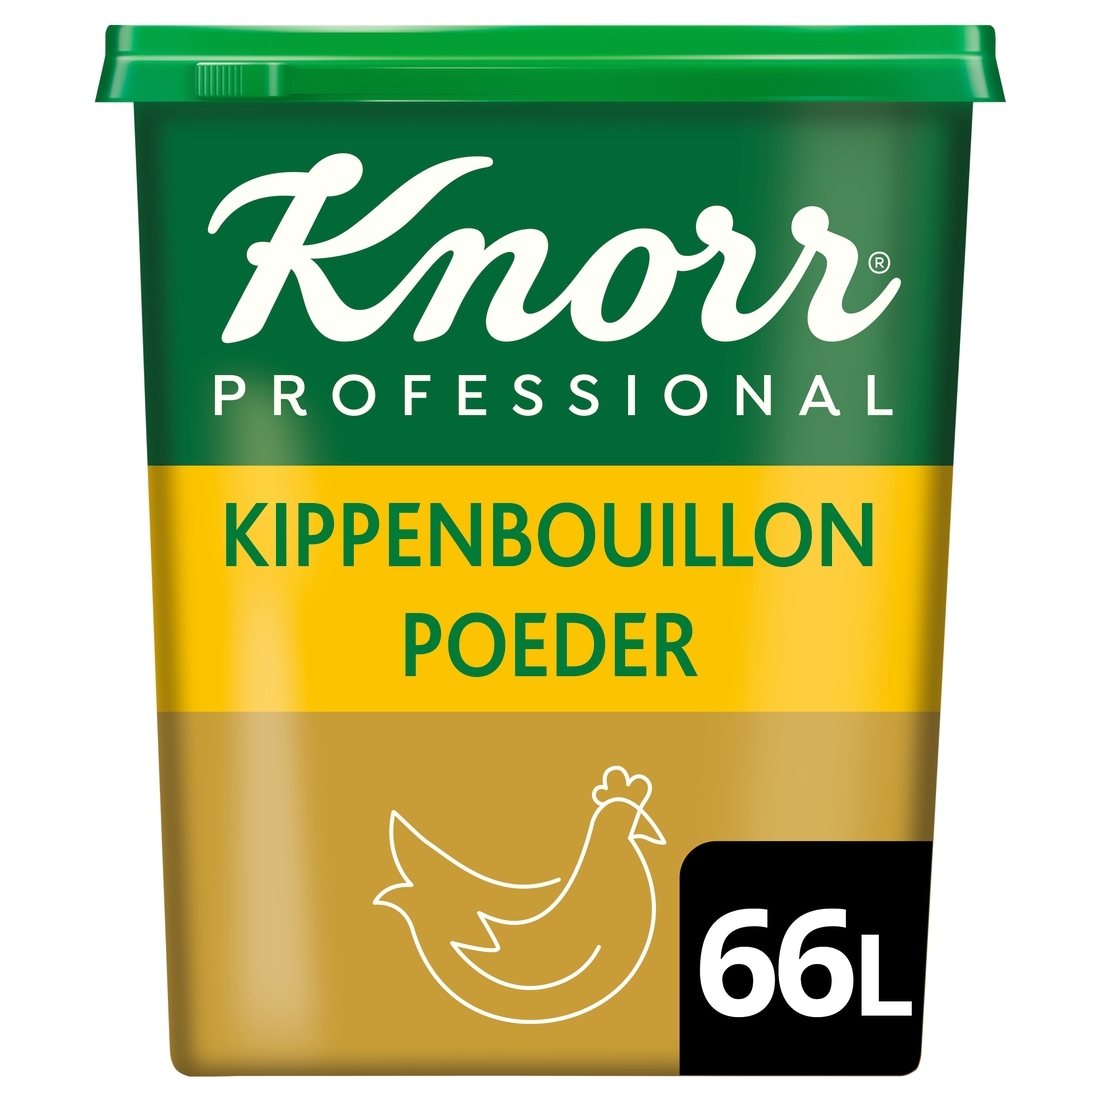 Knorr Professional Kippenbouillon poeder krachtig 66L - Ontdek Knorr Kippenbouillon in poeder, voor een krachtige smaak